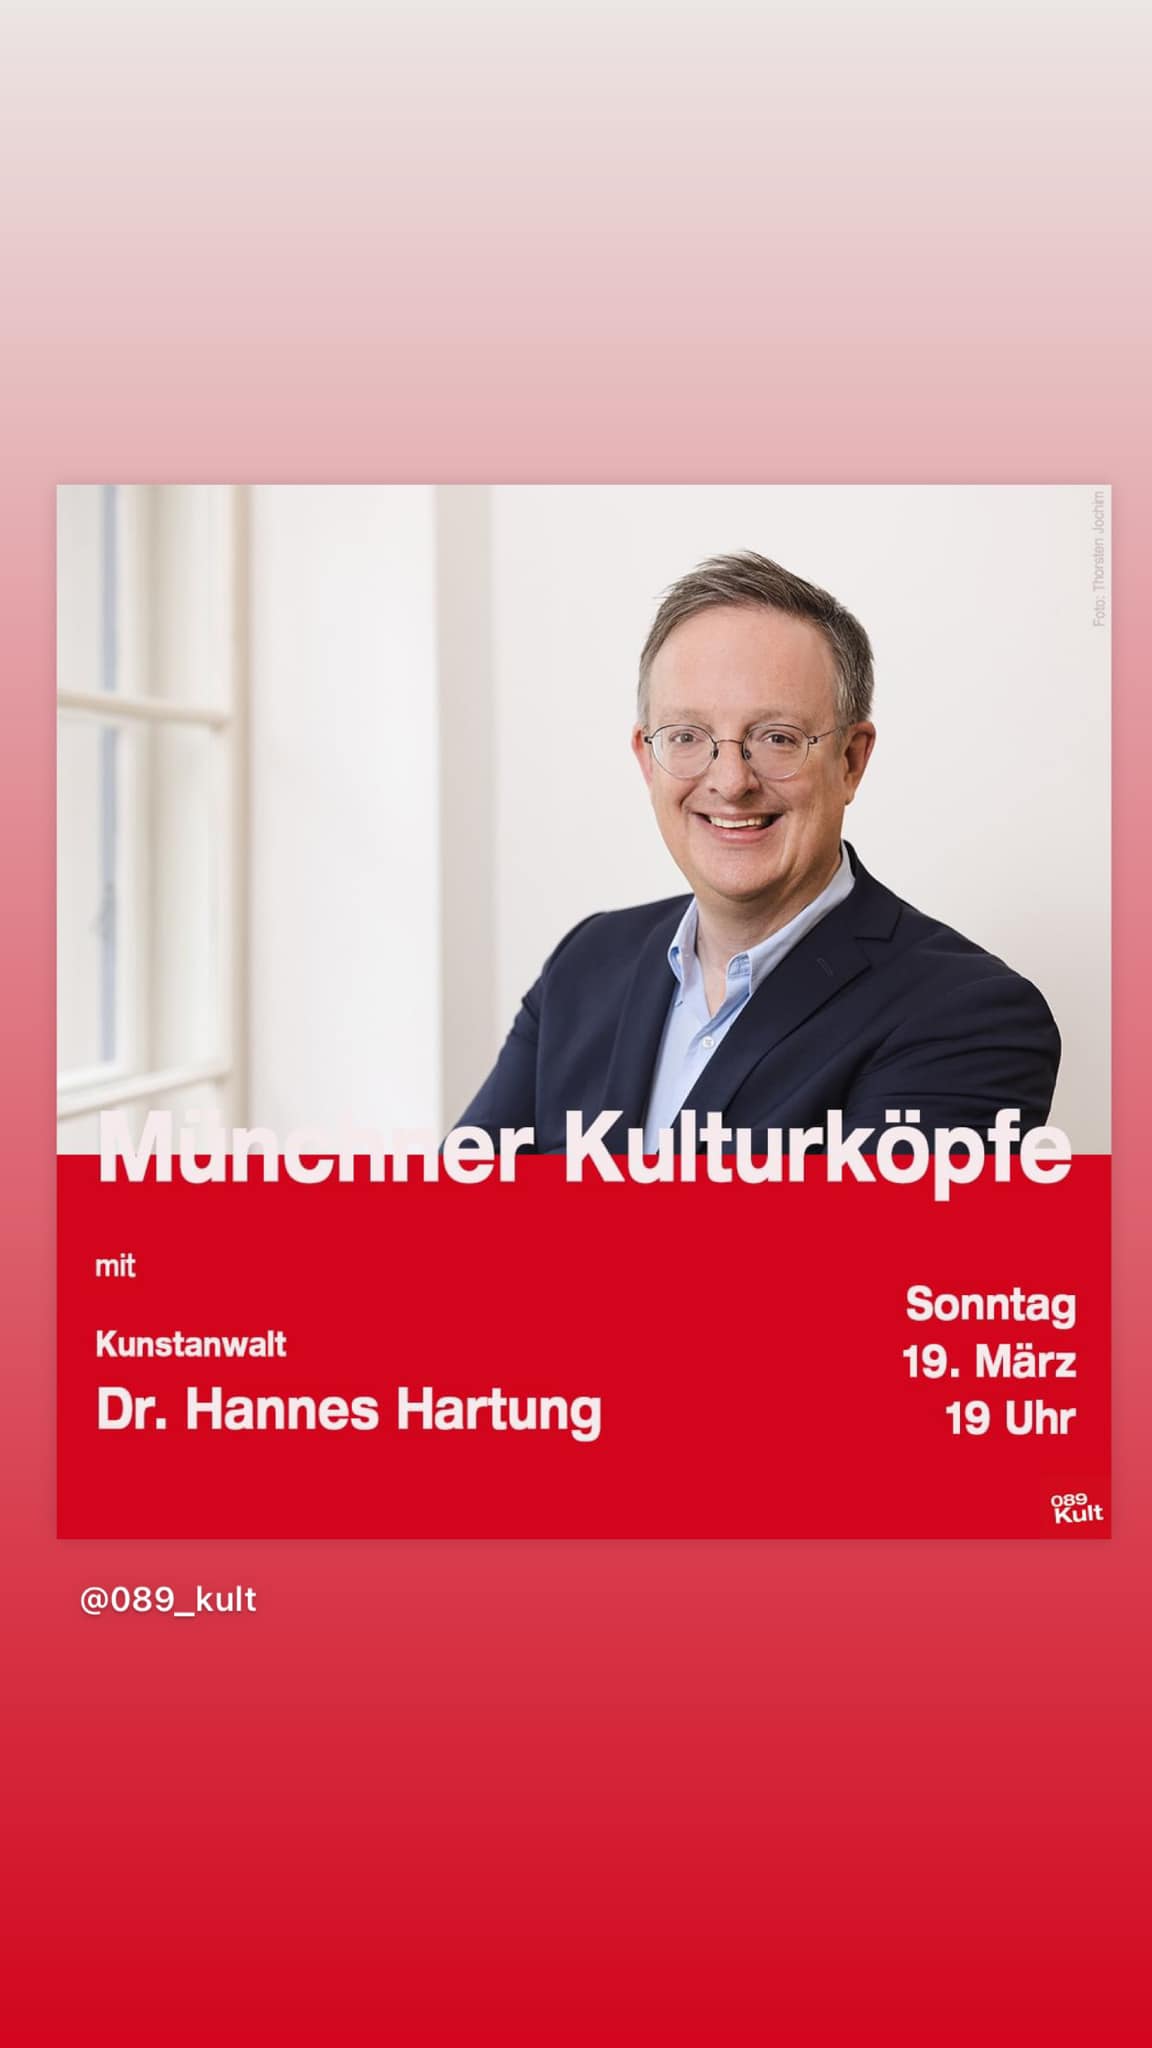 RA Dr. Hannes Hartung zu Gast bei 089 Kult